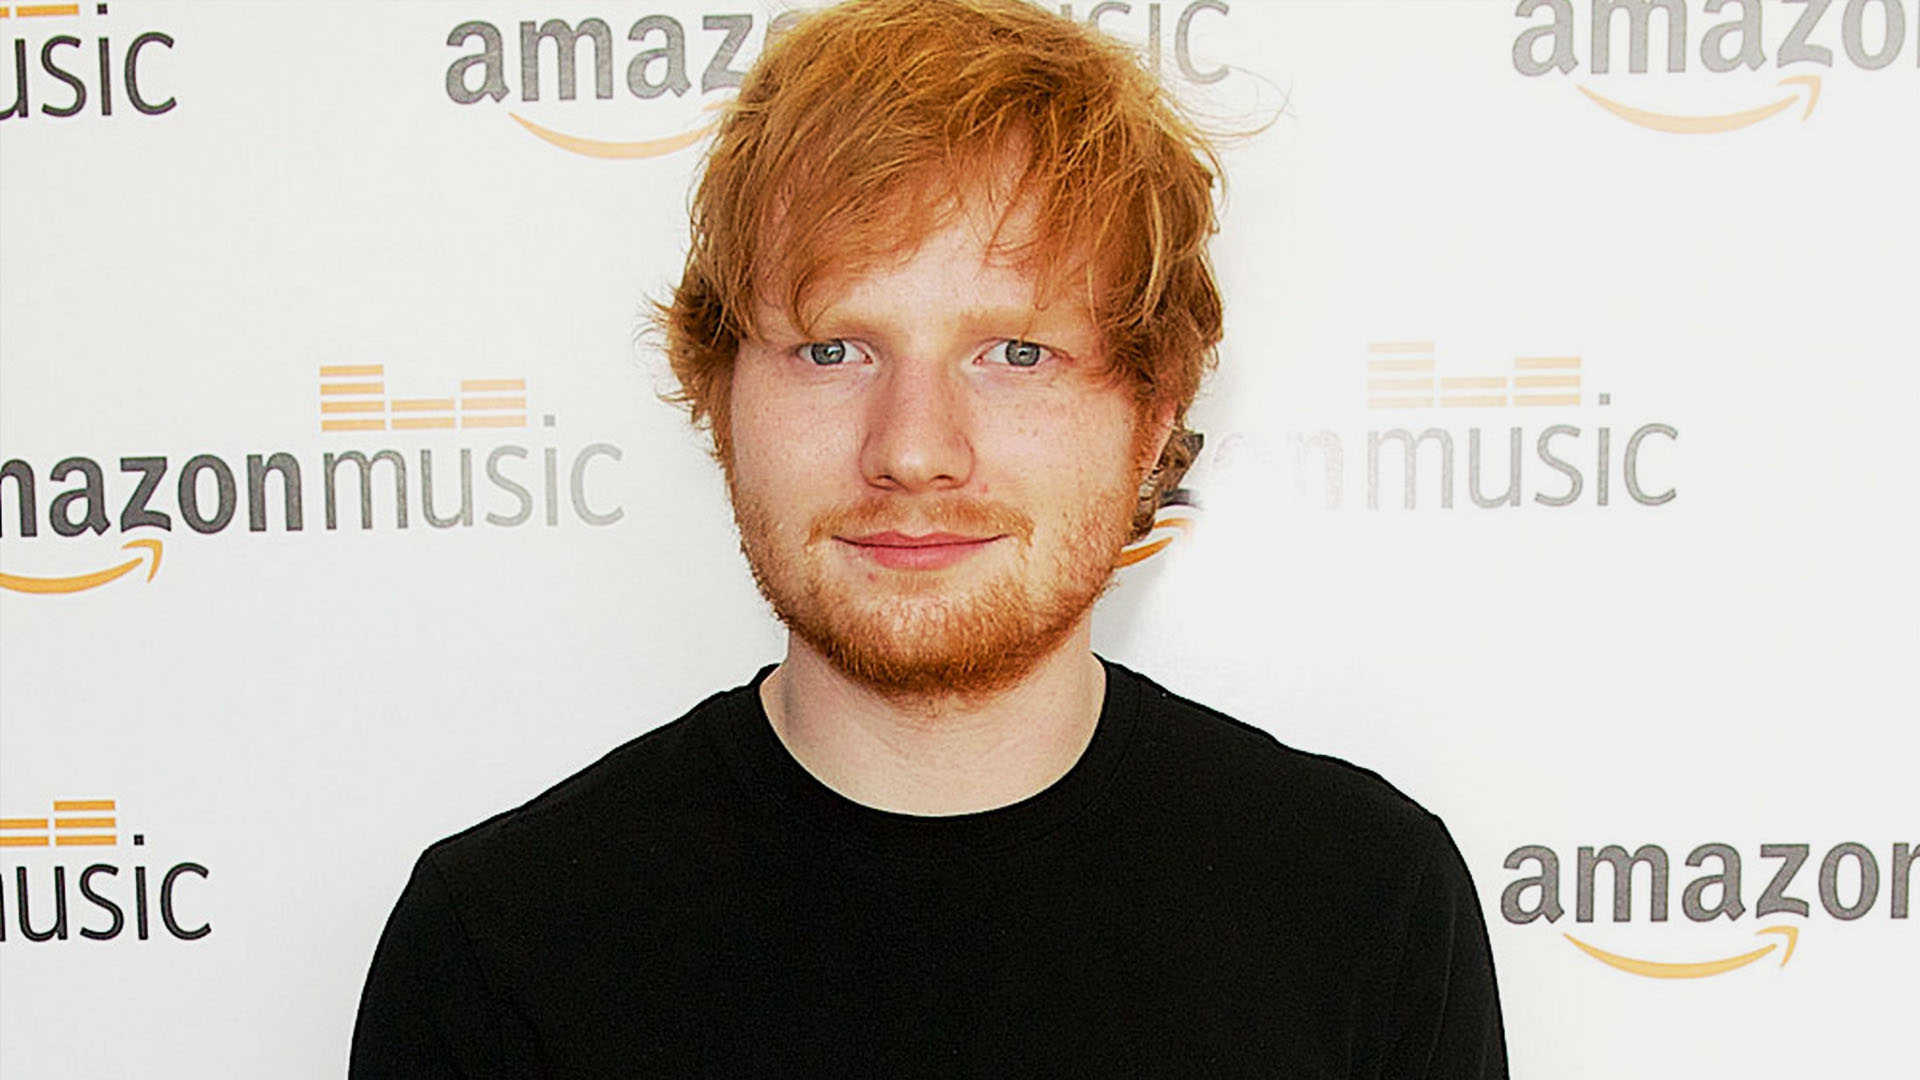 Ed Sheeran On Amazonmusic Wallpapers